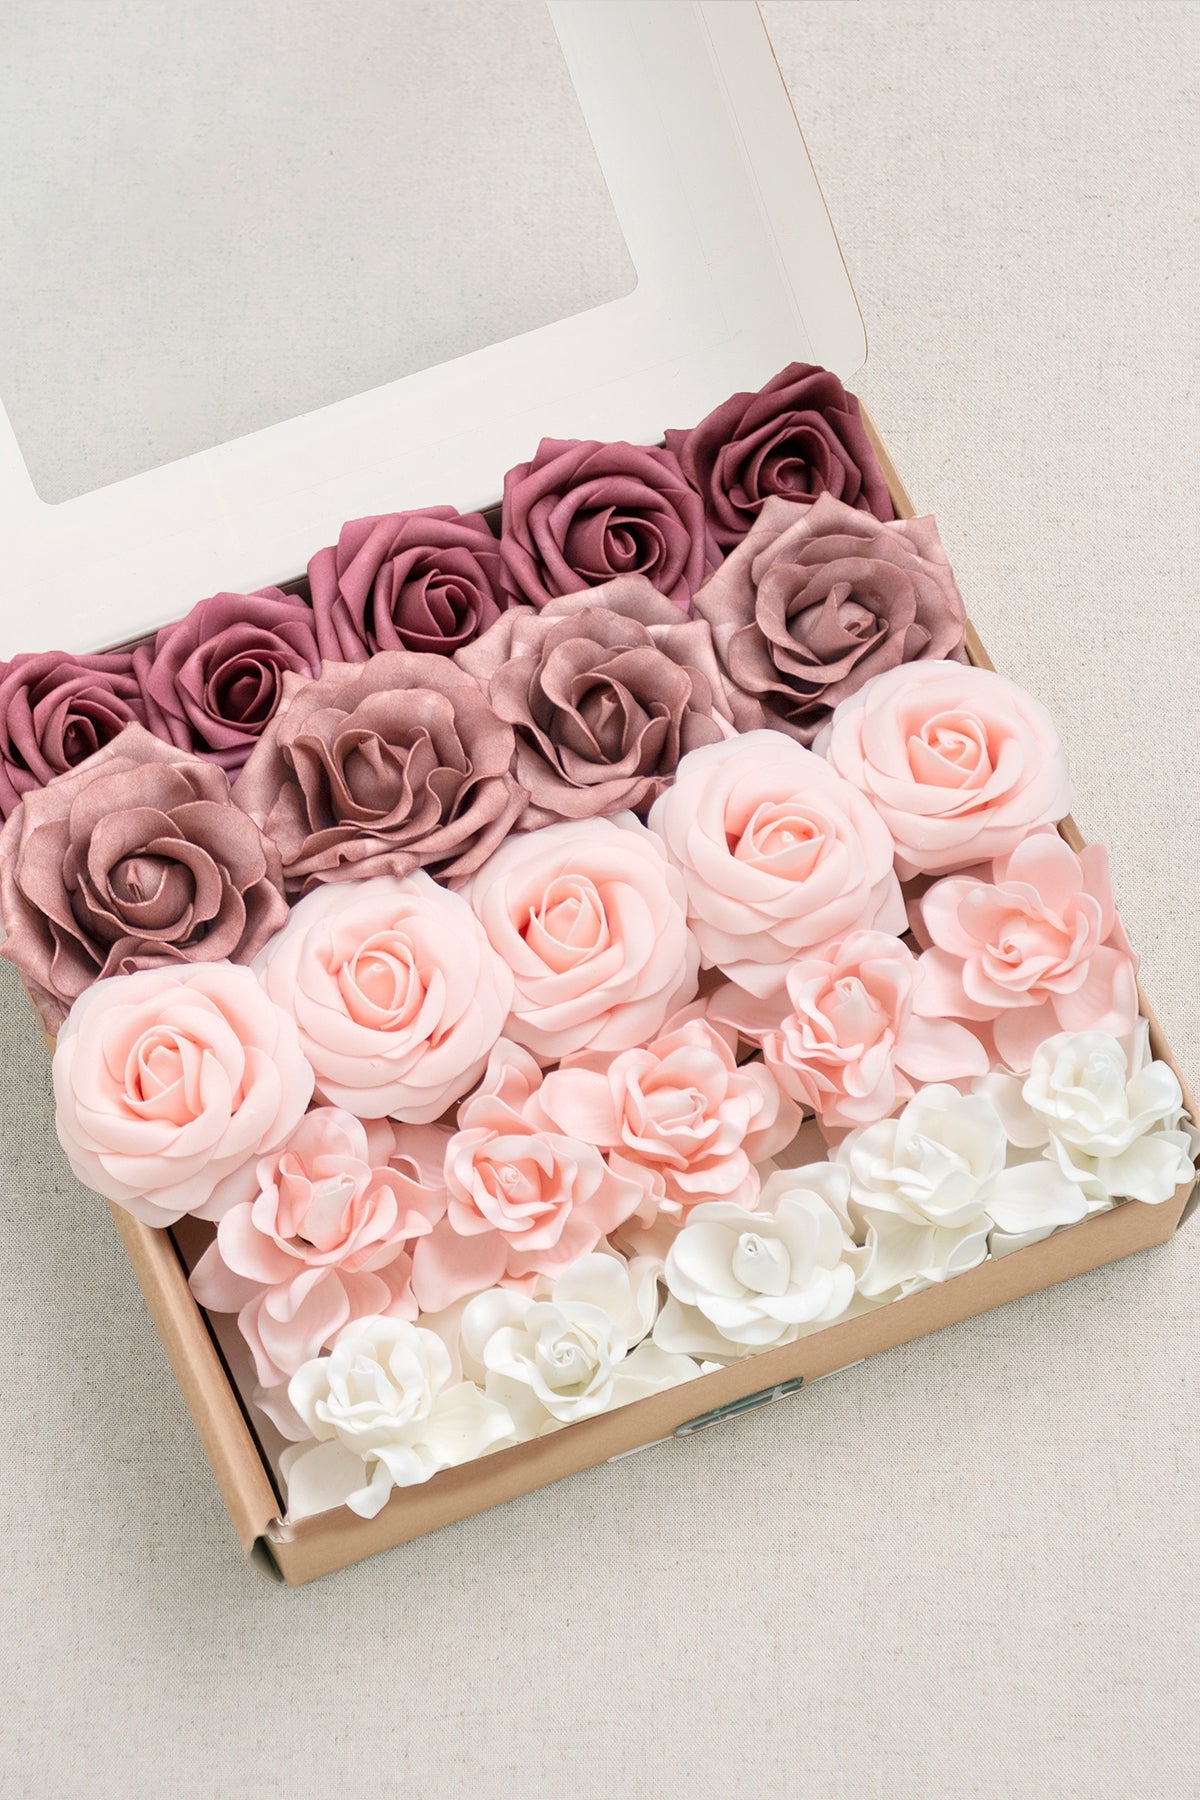 Basic Flower Boxes - 35 Colors